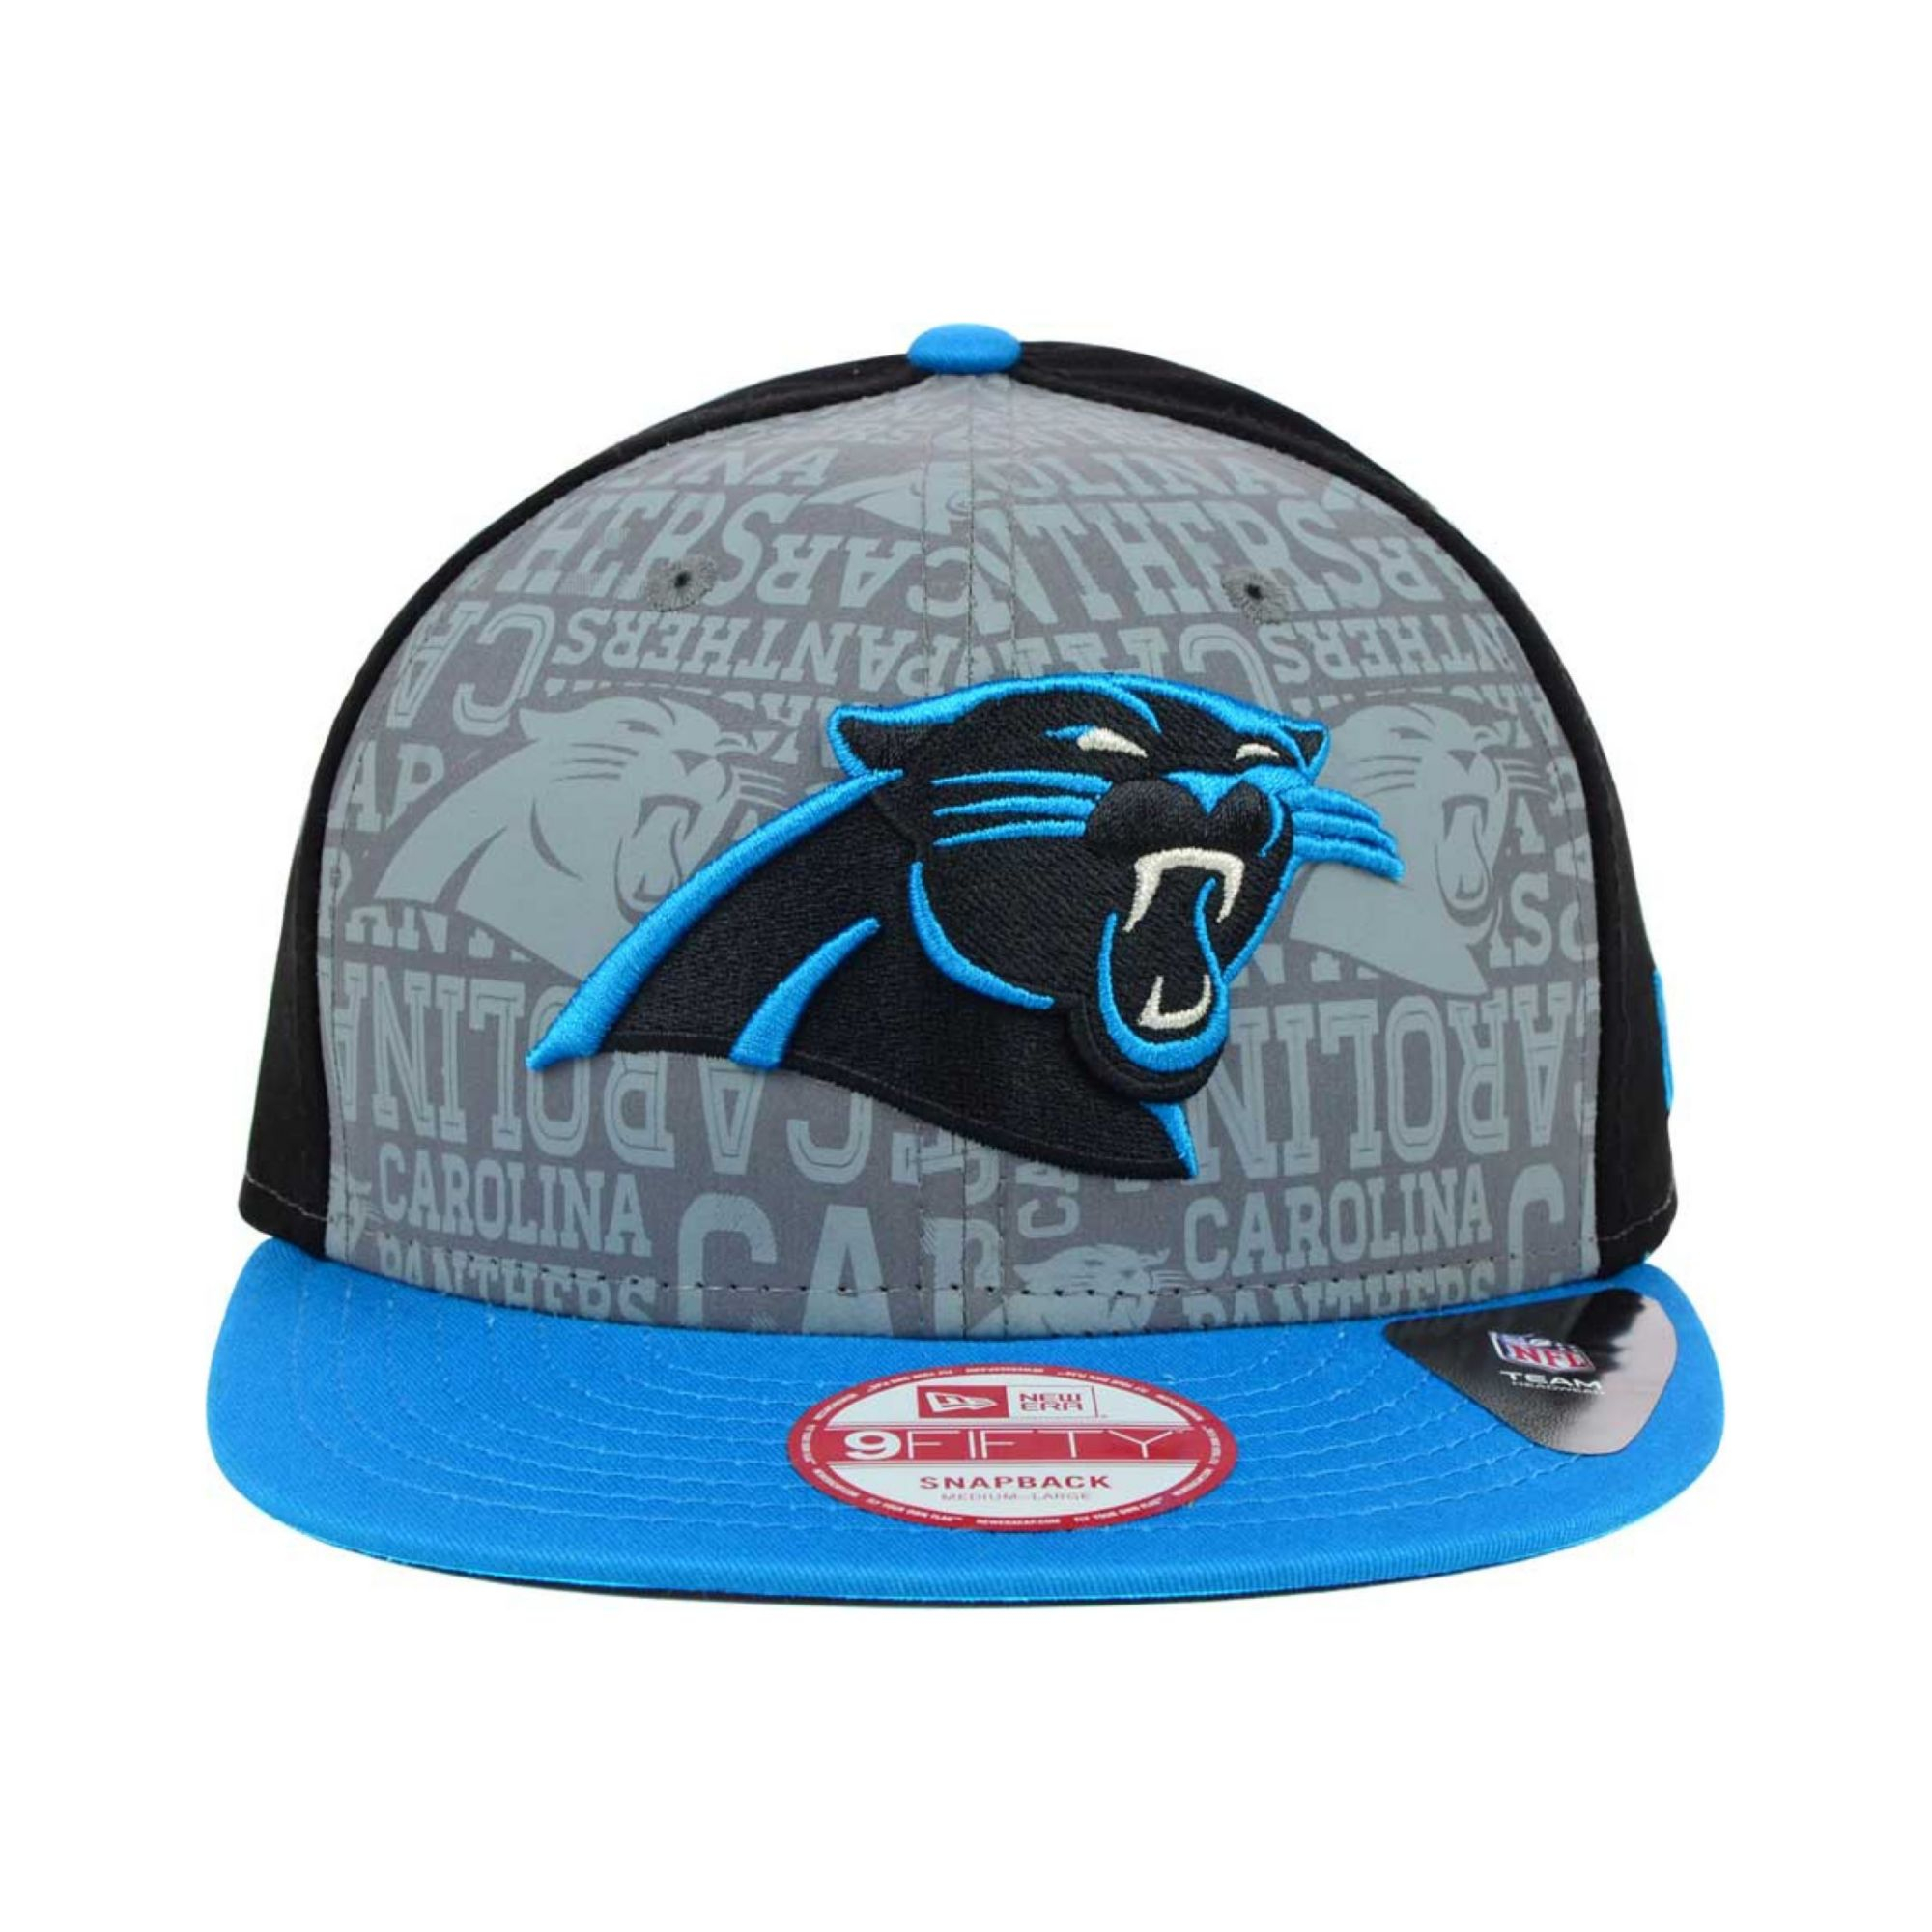 Lyst Ktz Carolina Panthers Nfl Draft 9fifty Snapback Cap in Blue for Men